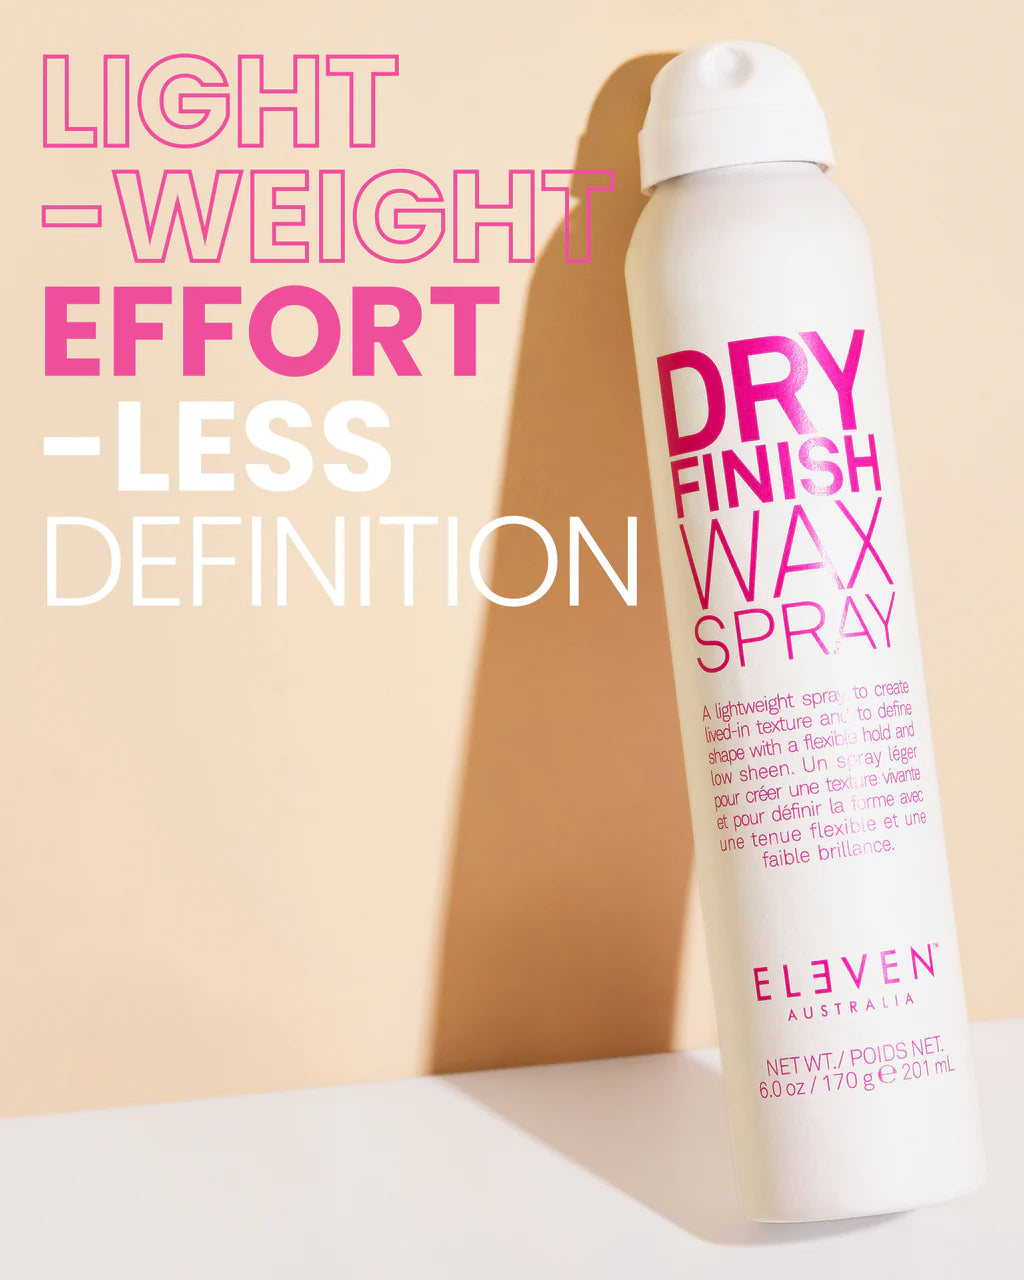 ELEVEN AUSTRALIA Dry Finish Wax Spray 200ml